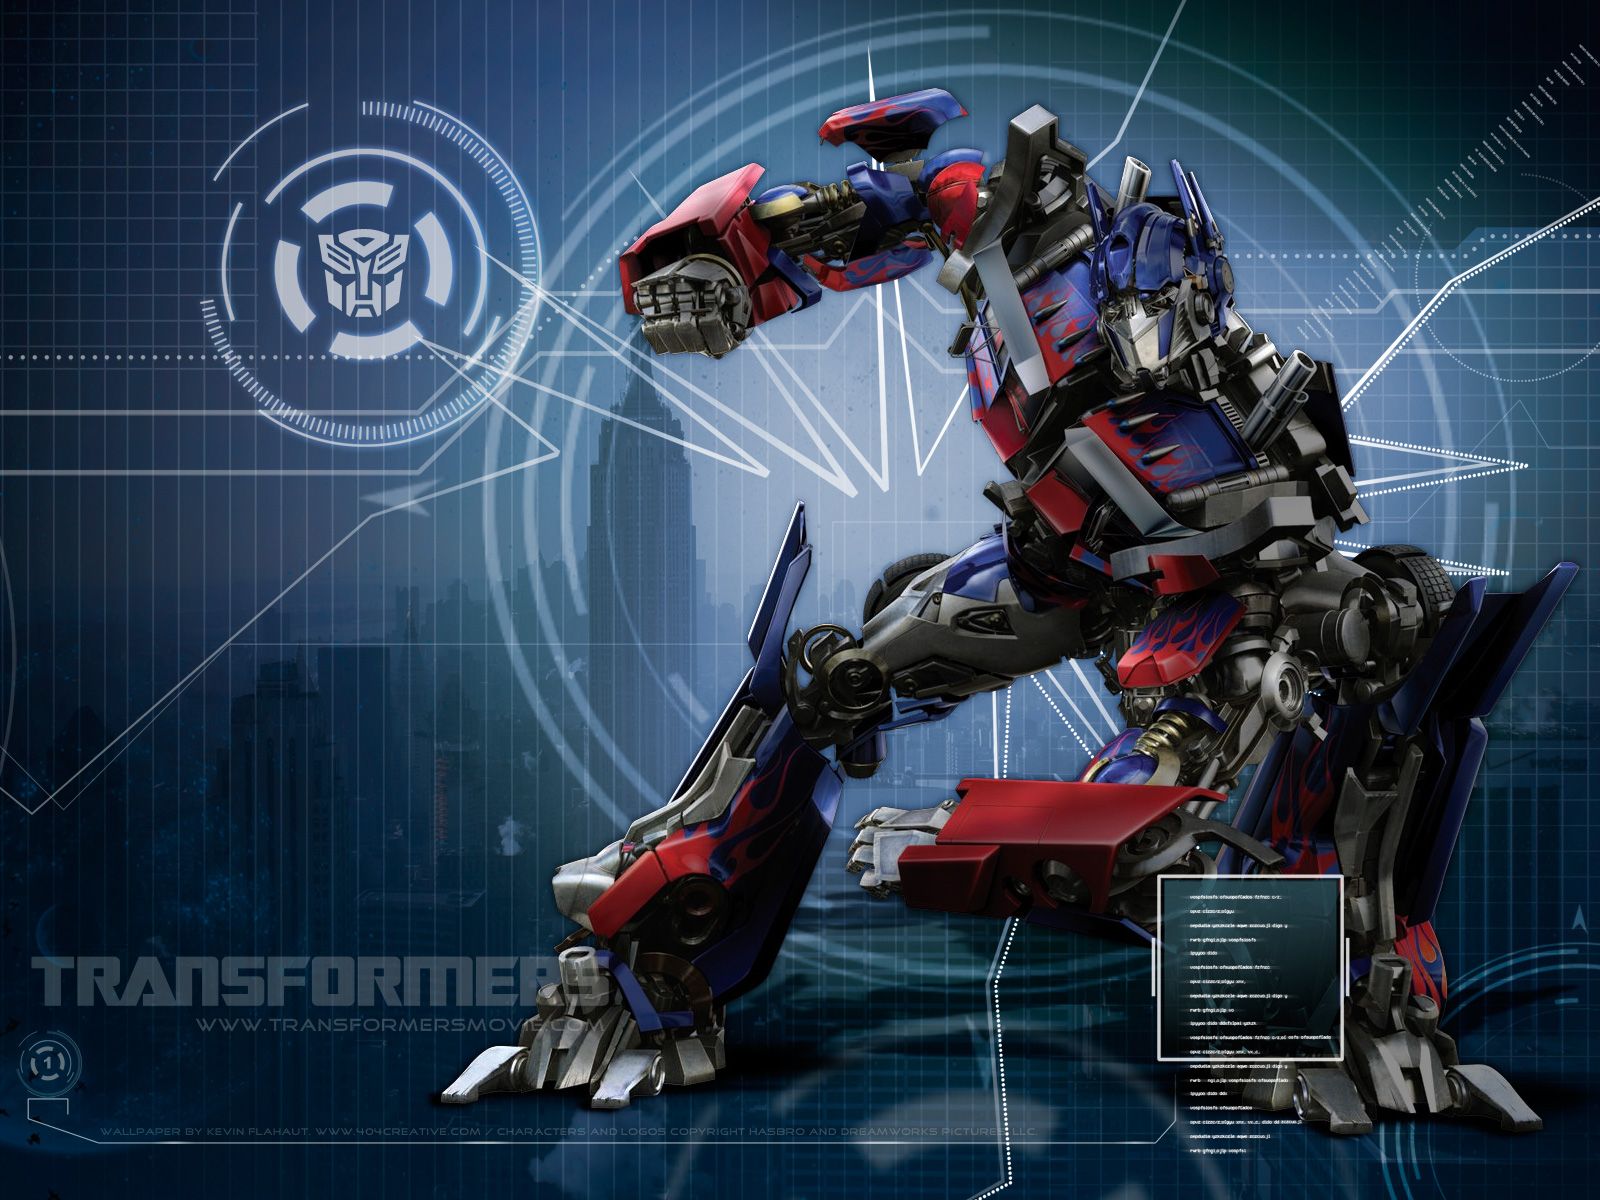 Download Transformers Movie Wallpaper, 404 Creative Studios